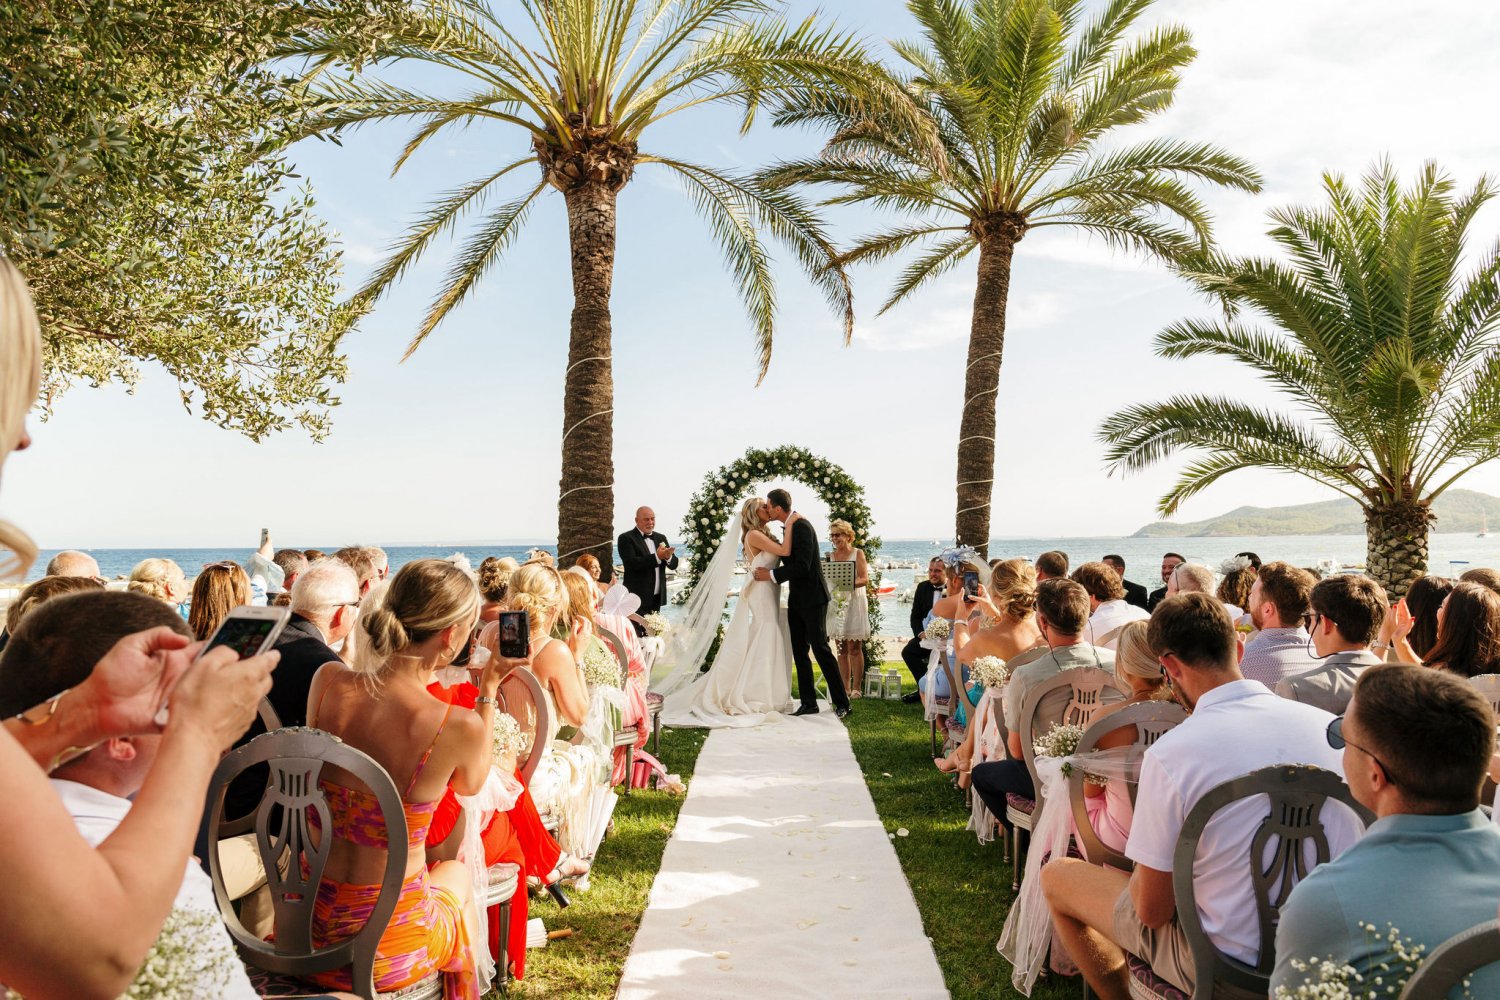 Ibiza's best wedding venues